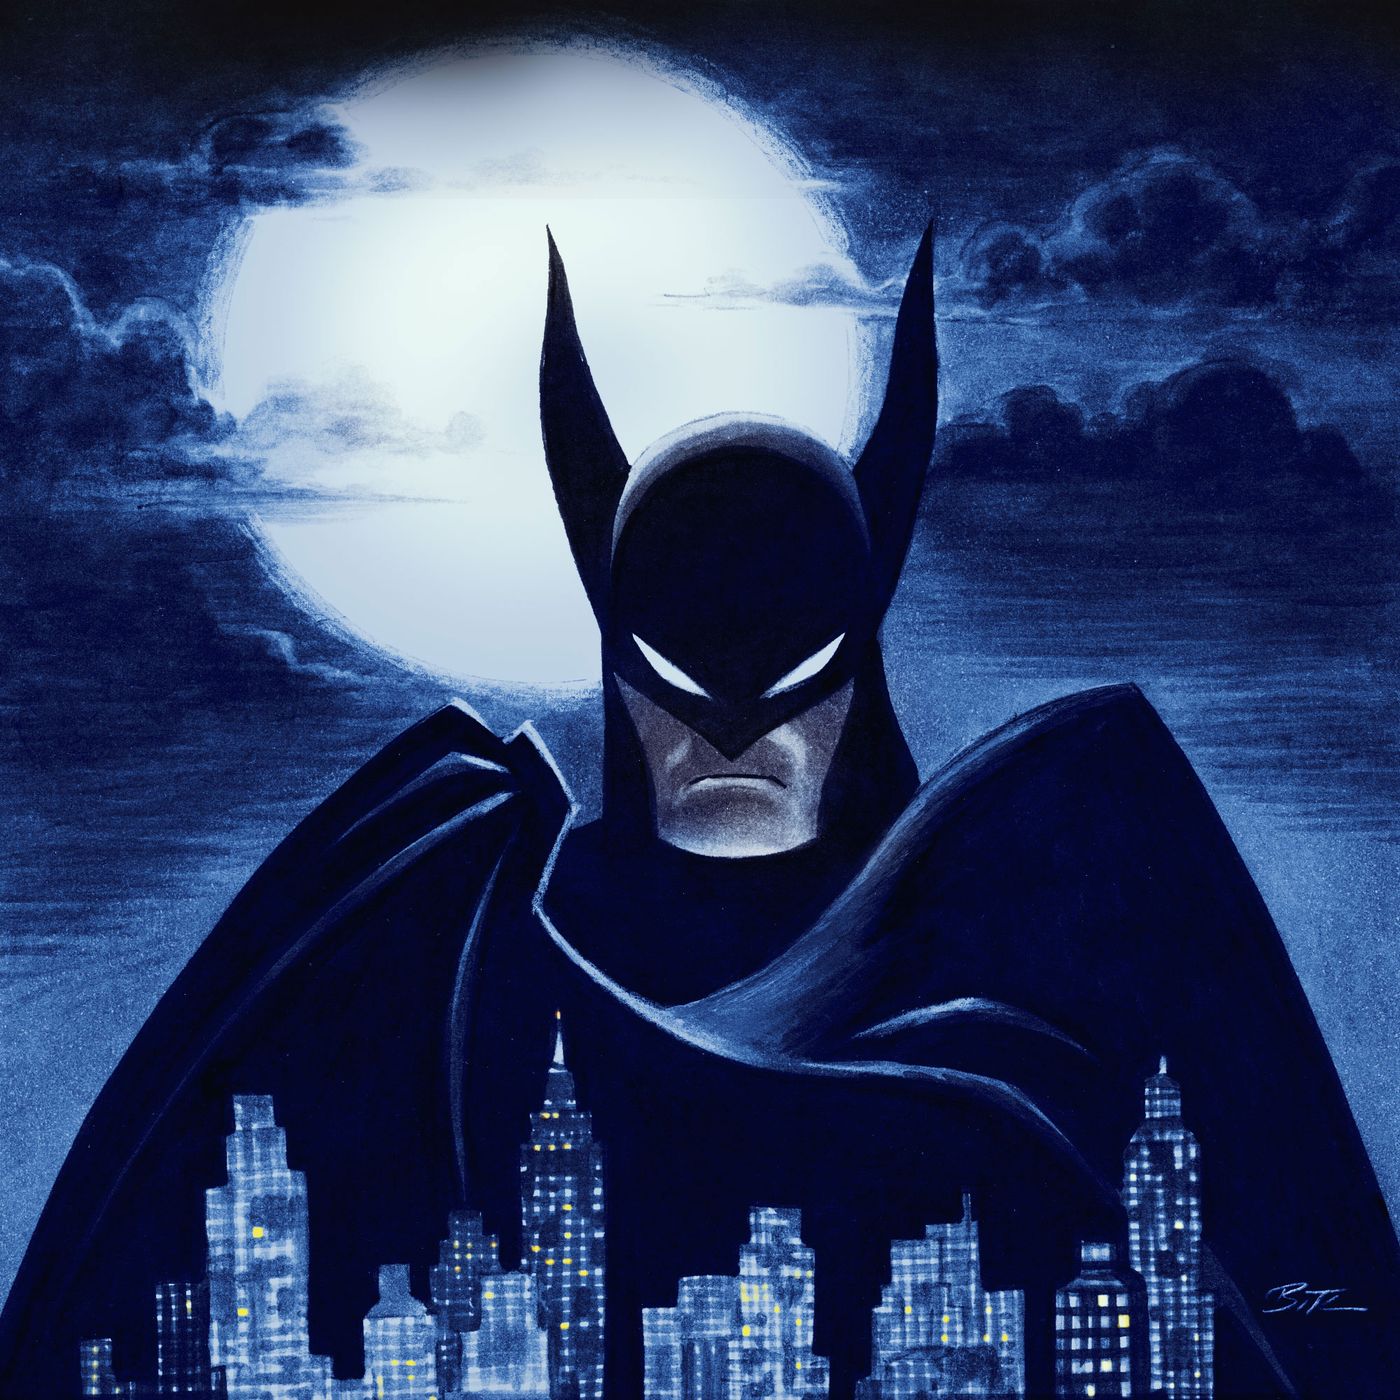 Batman Animated wallpaper by FincArts  Download on ZEDGE  4b5e